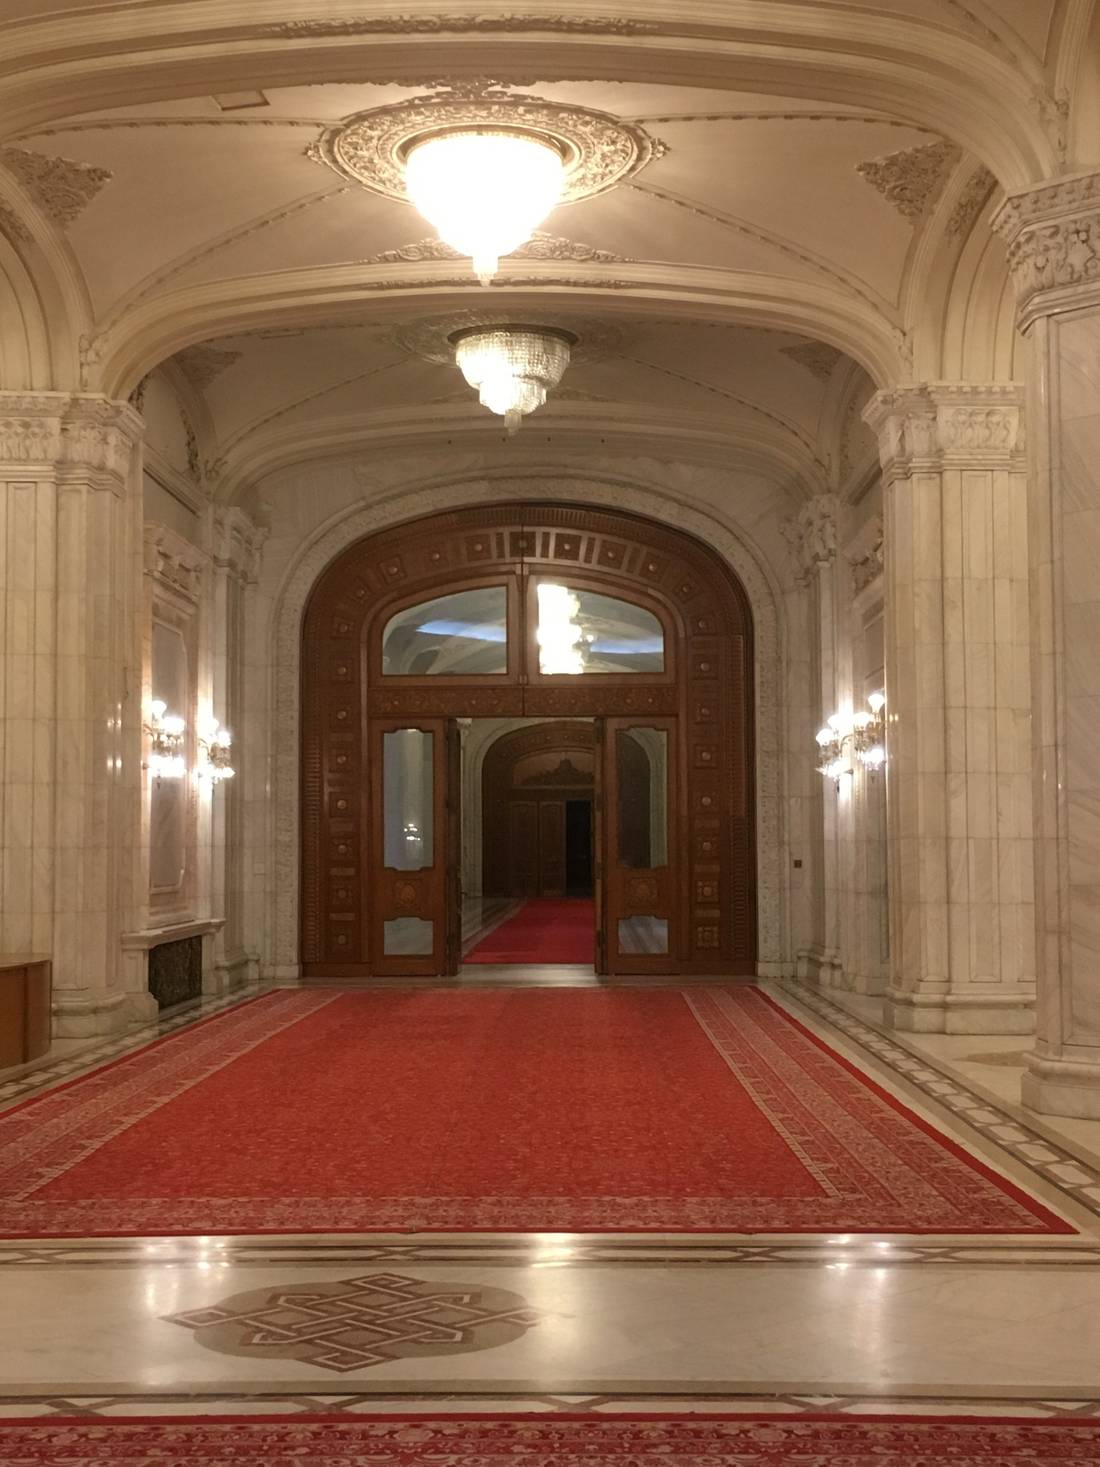 Inside the Parliament building